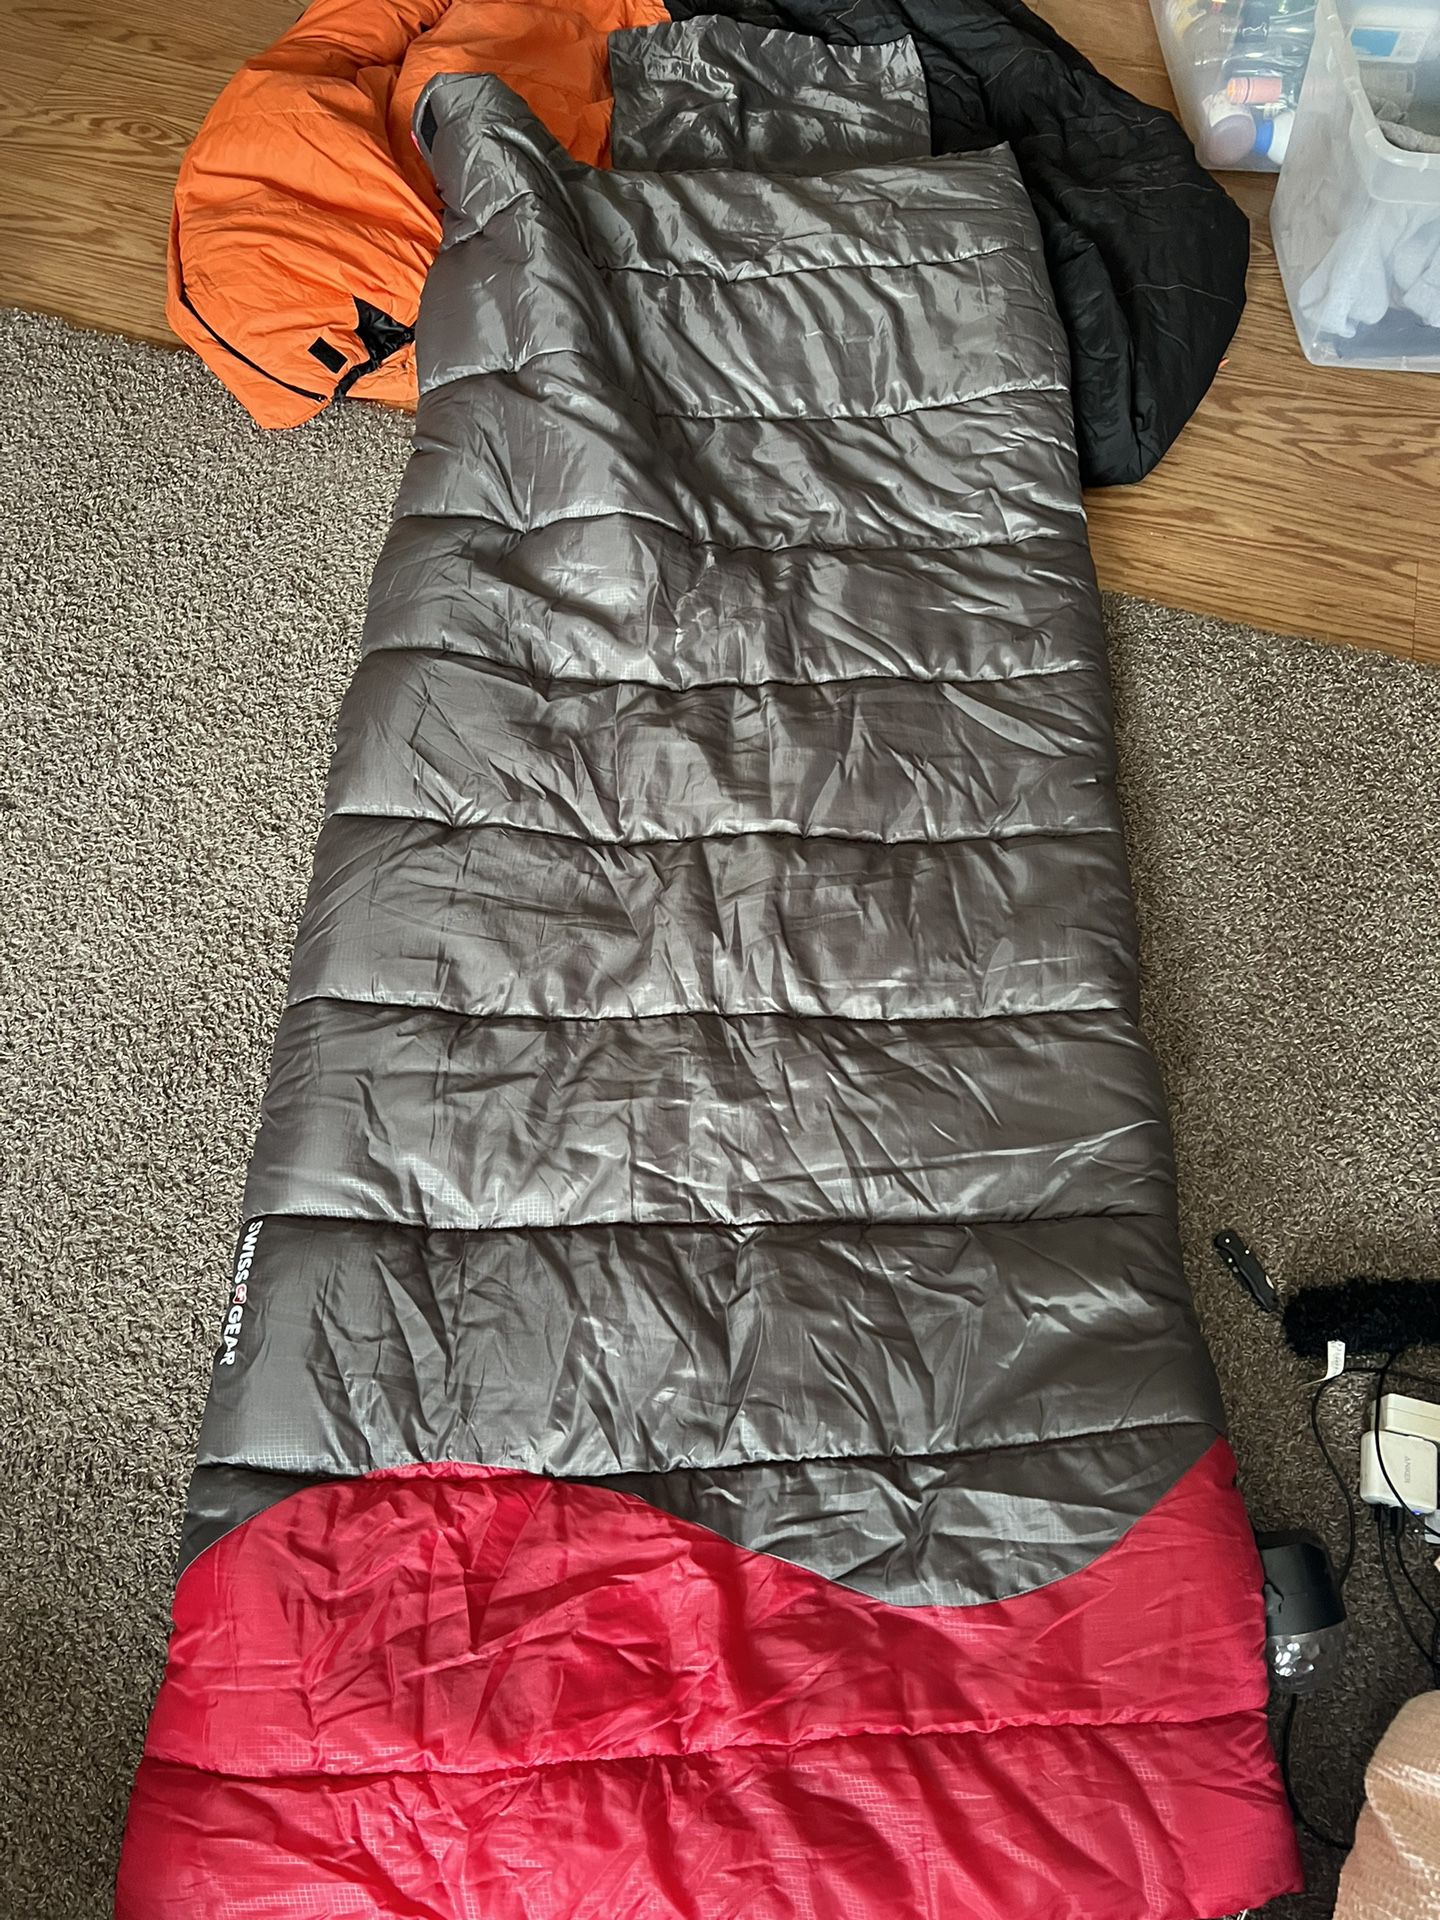 swiss gear sleeping bag